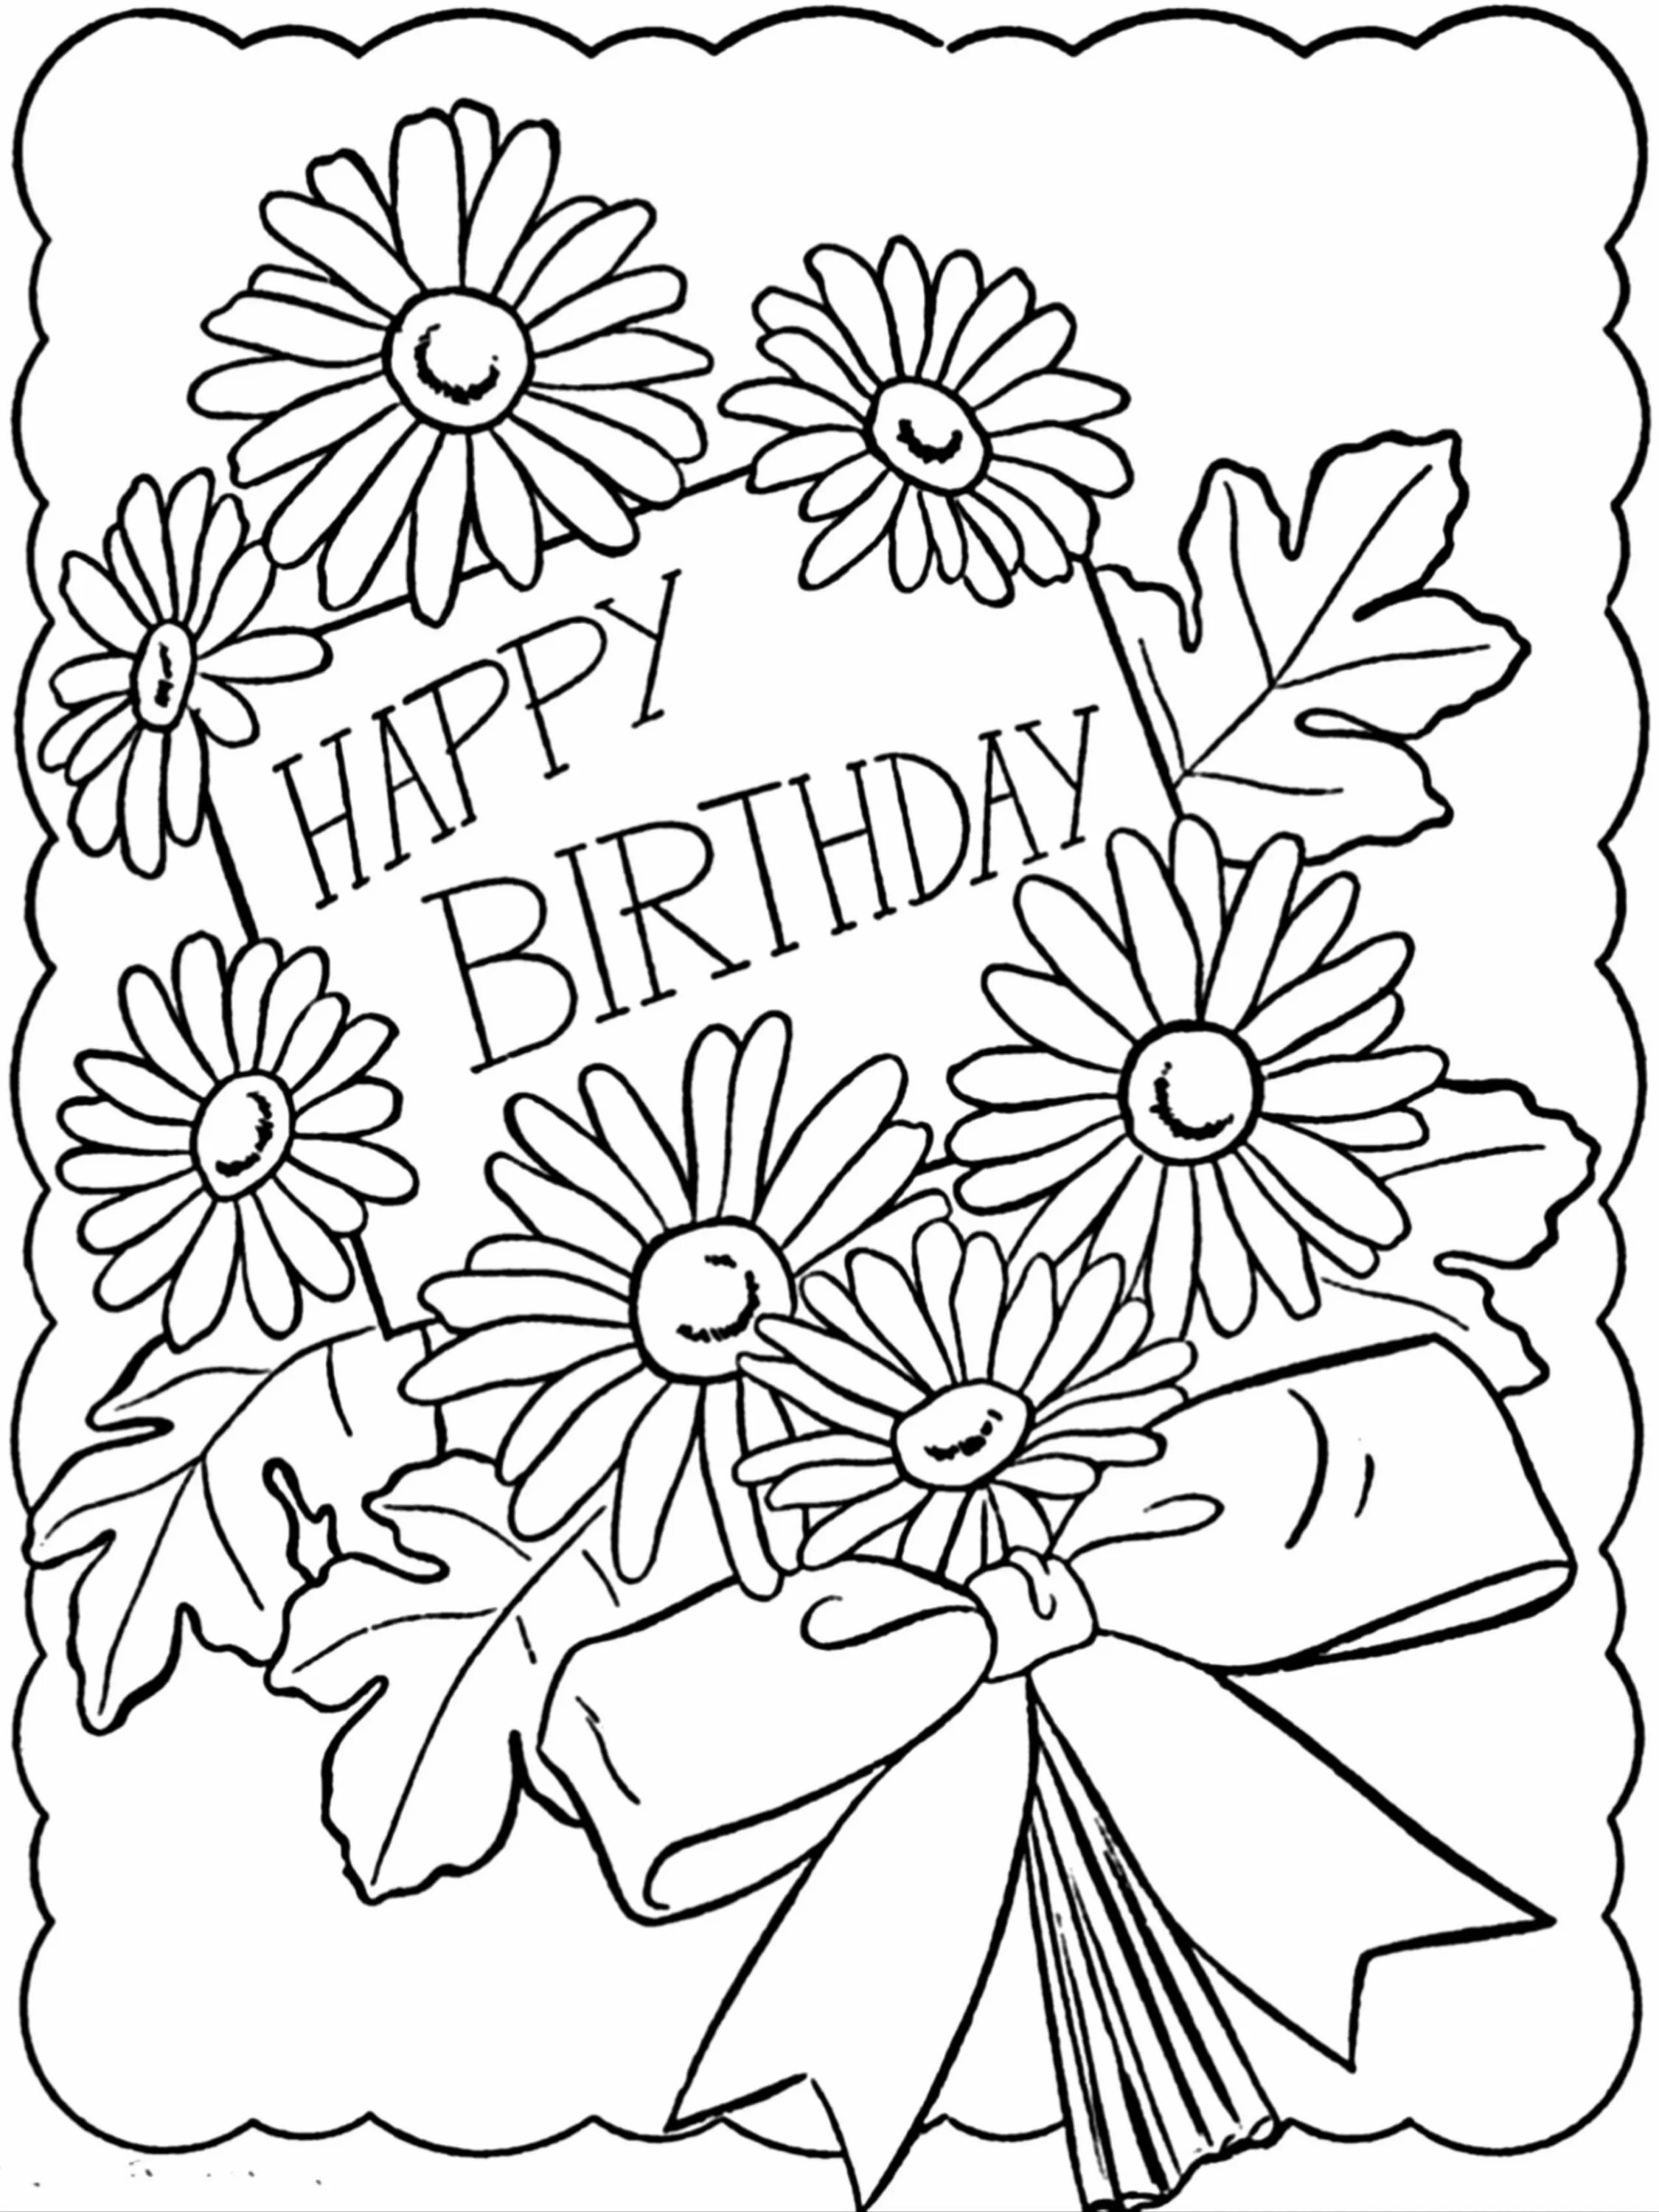 Открытка раскраска с днем рождения. Открытка раскраска с днем рожде. Картинки раскраски с днем рождения красивые. Открытки разкраски с днём рождения. Поздравительная раскраска